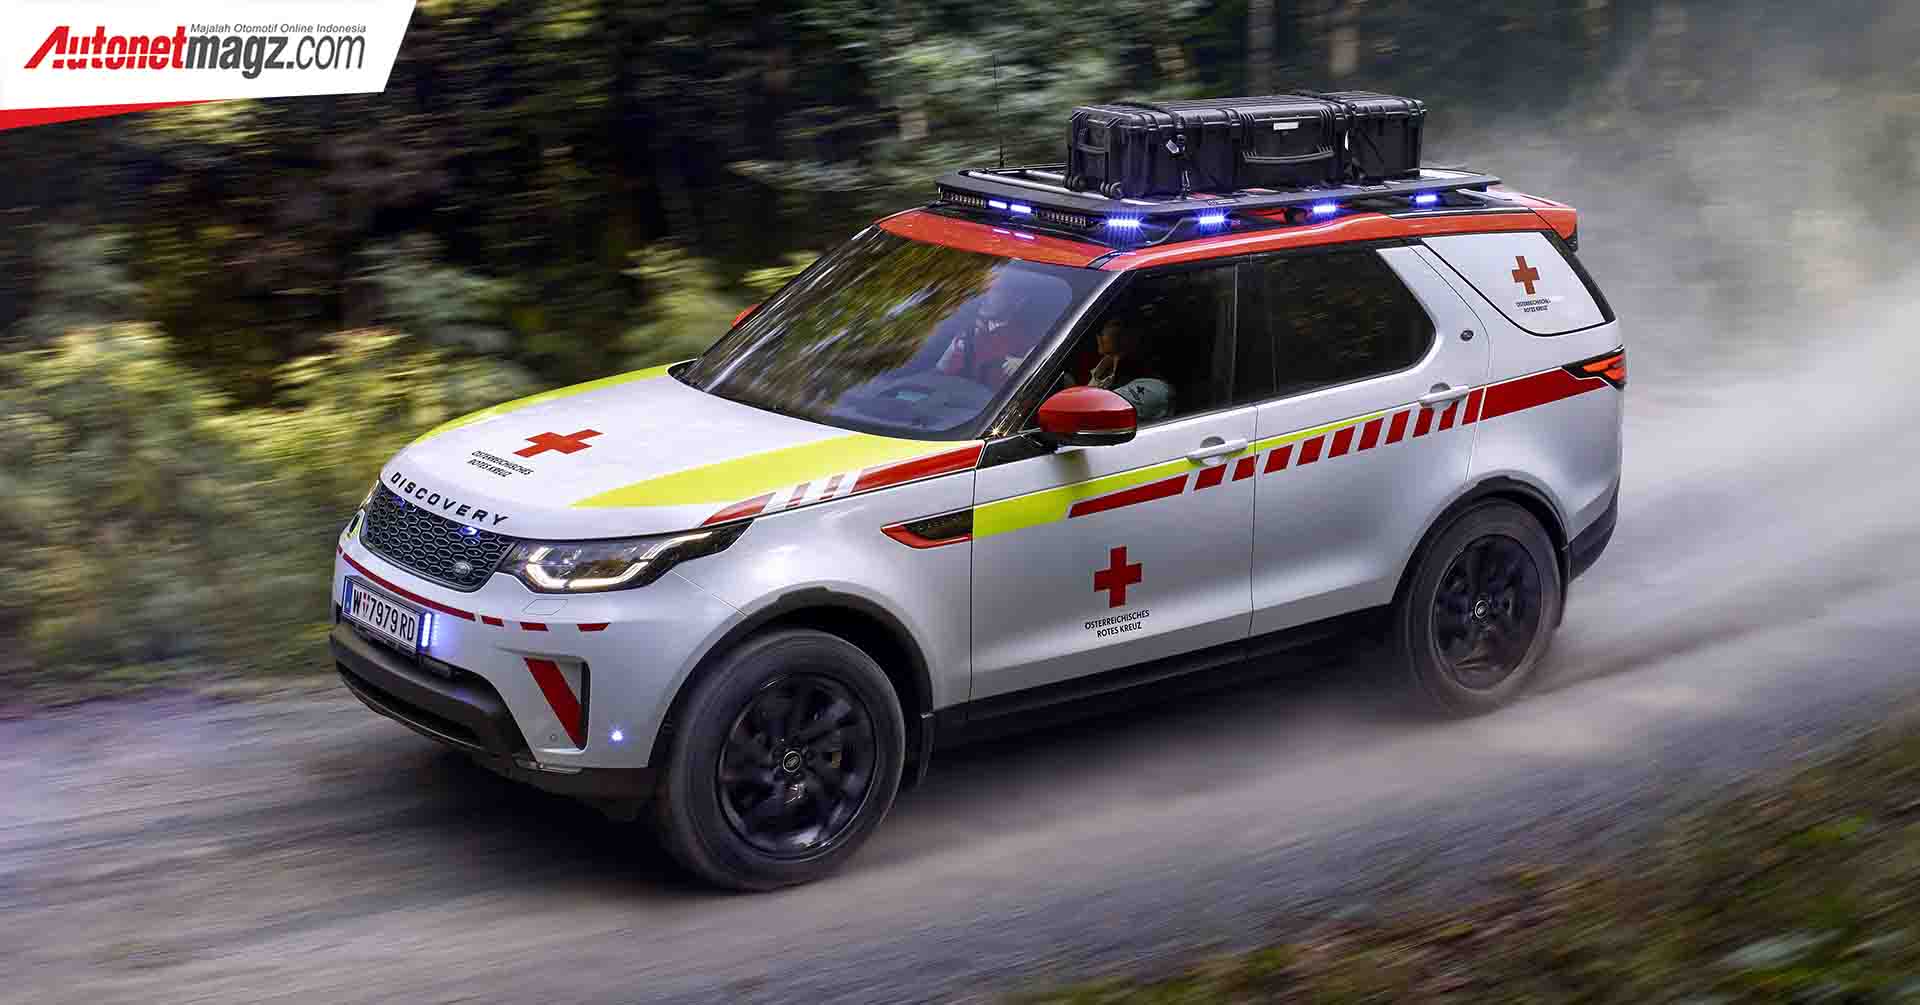 Berita, Land Rover Red Cross Discovery samping: Land Rover Memperkenalkan Discovery Edisi Khusus Palang Merah